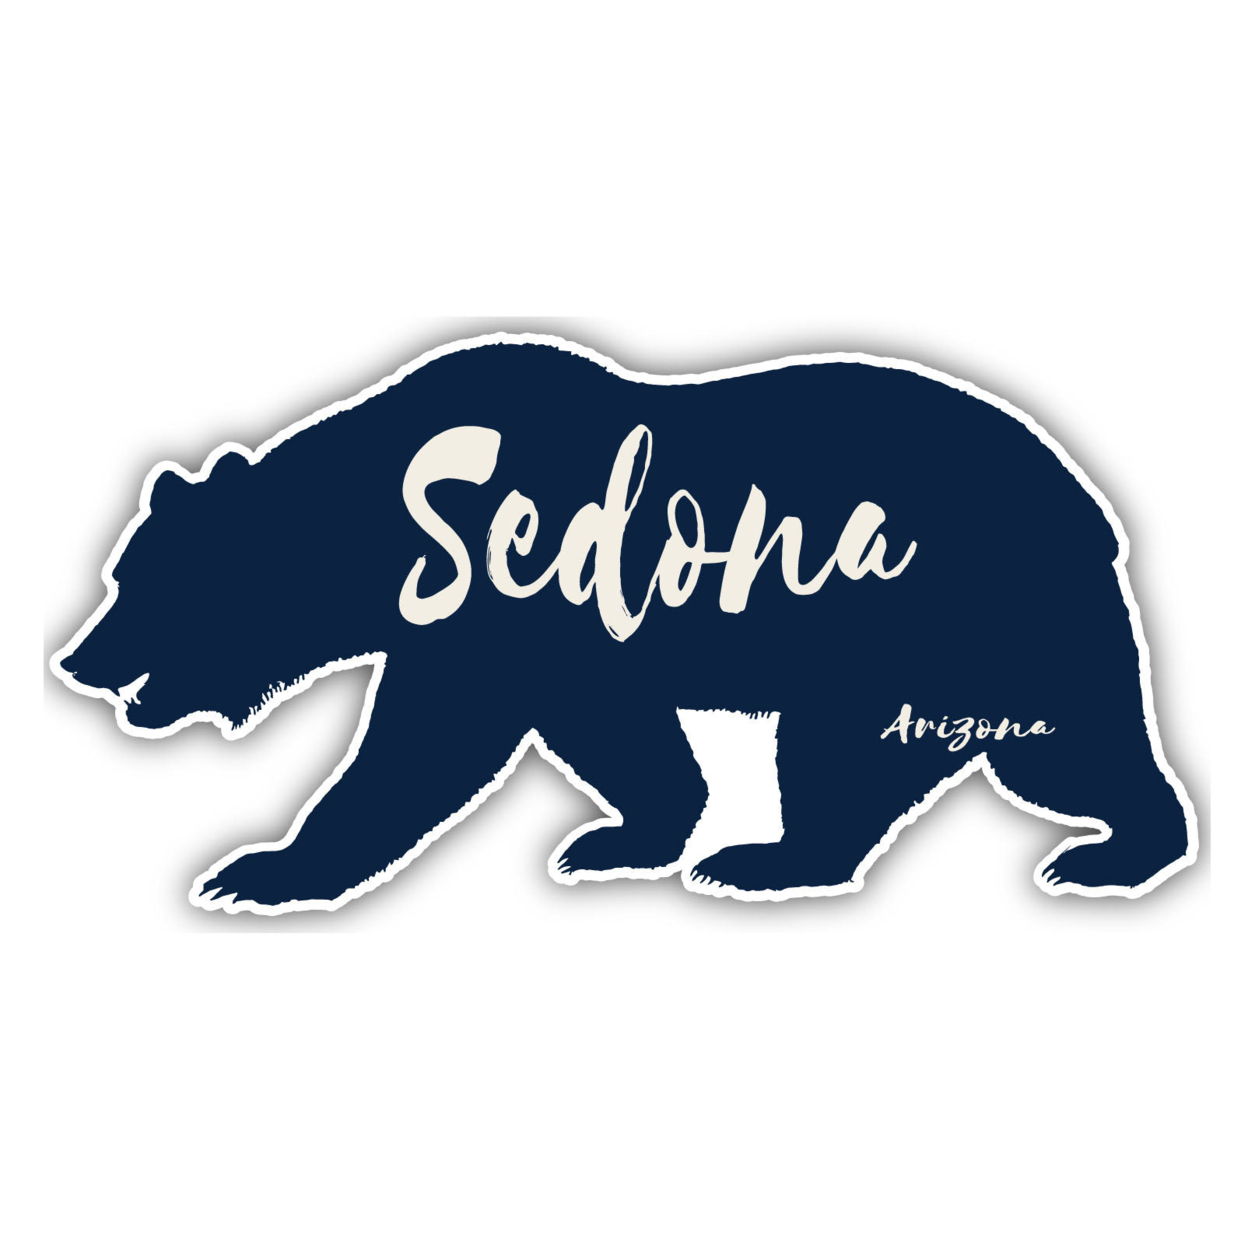 Sedona Arizona Souvenir Decorative Stickers (Choose Theme And Size) - Single Unit, 4-Inch, Bear